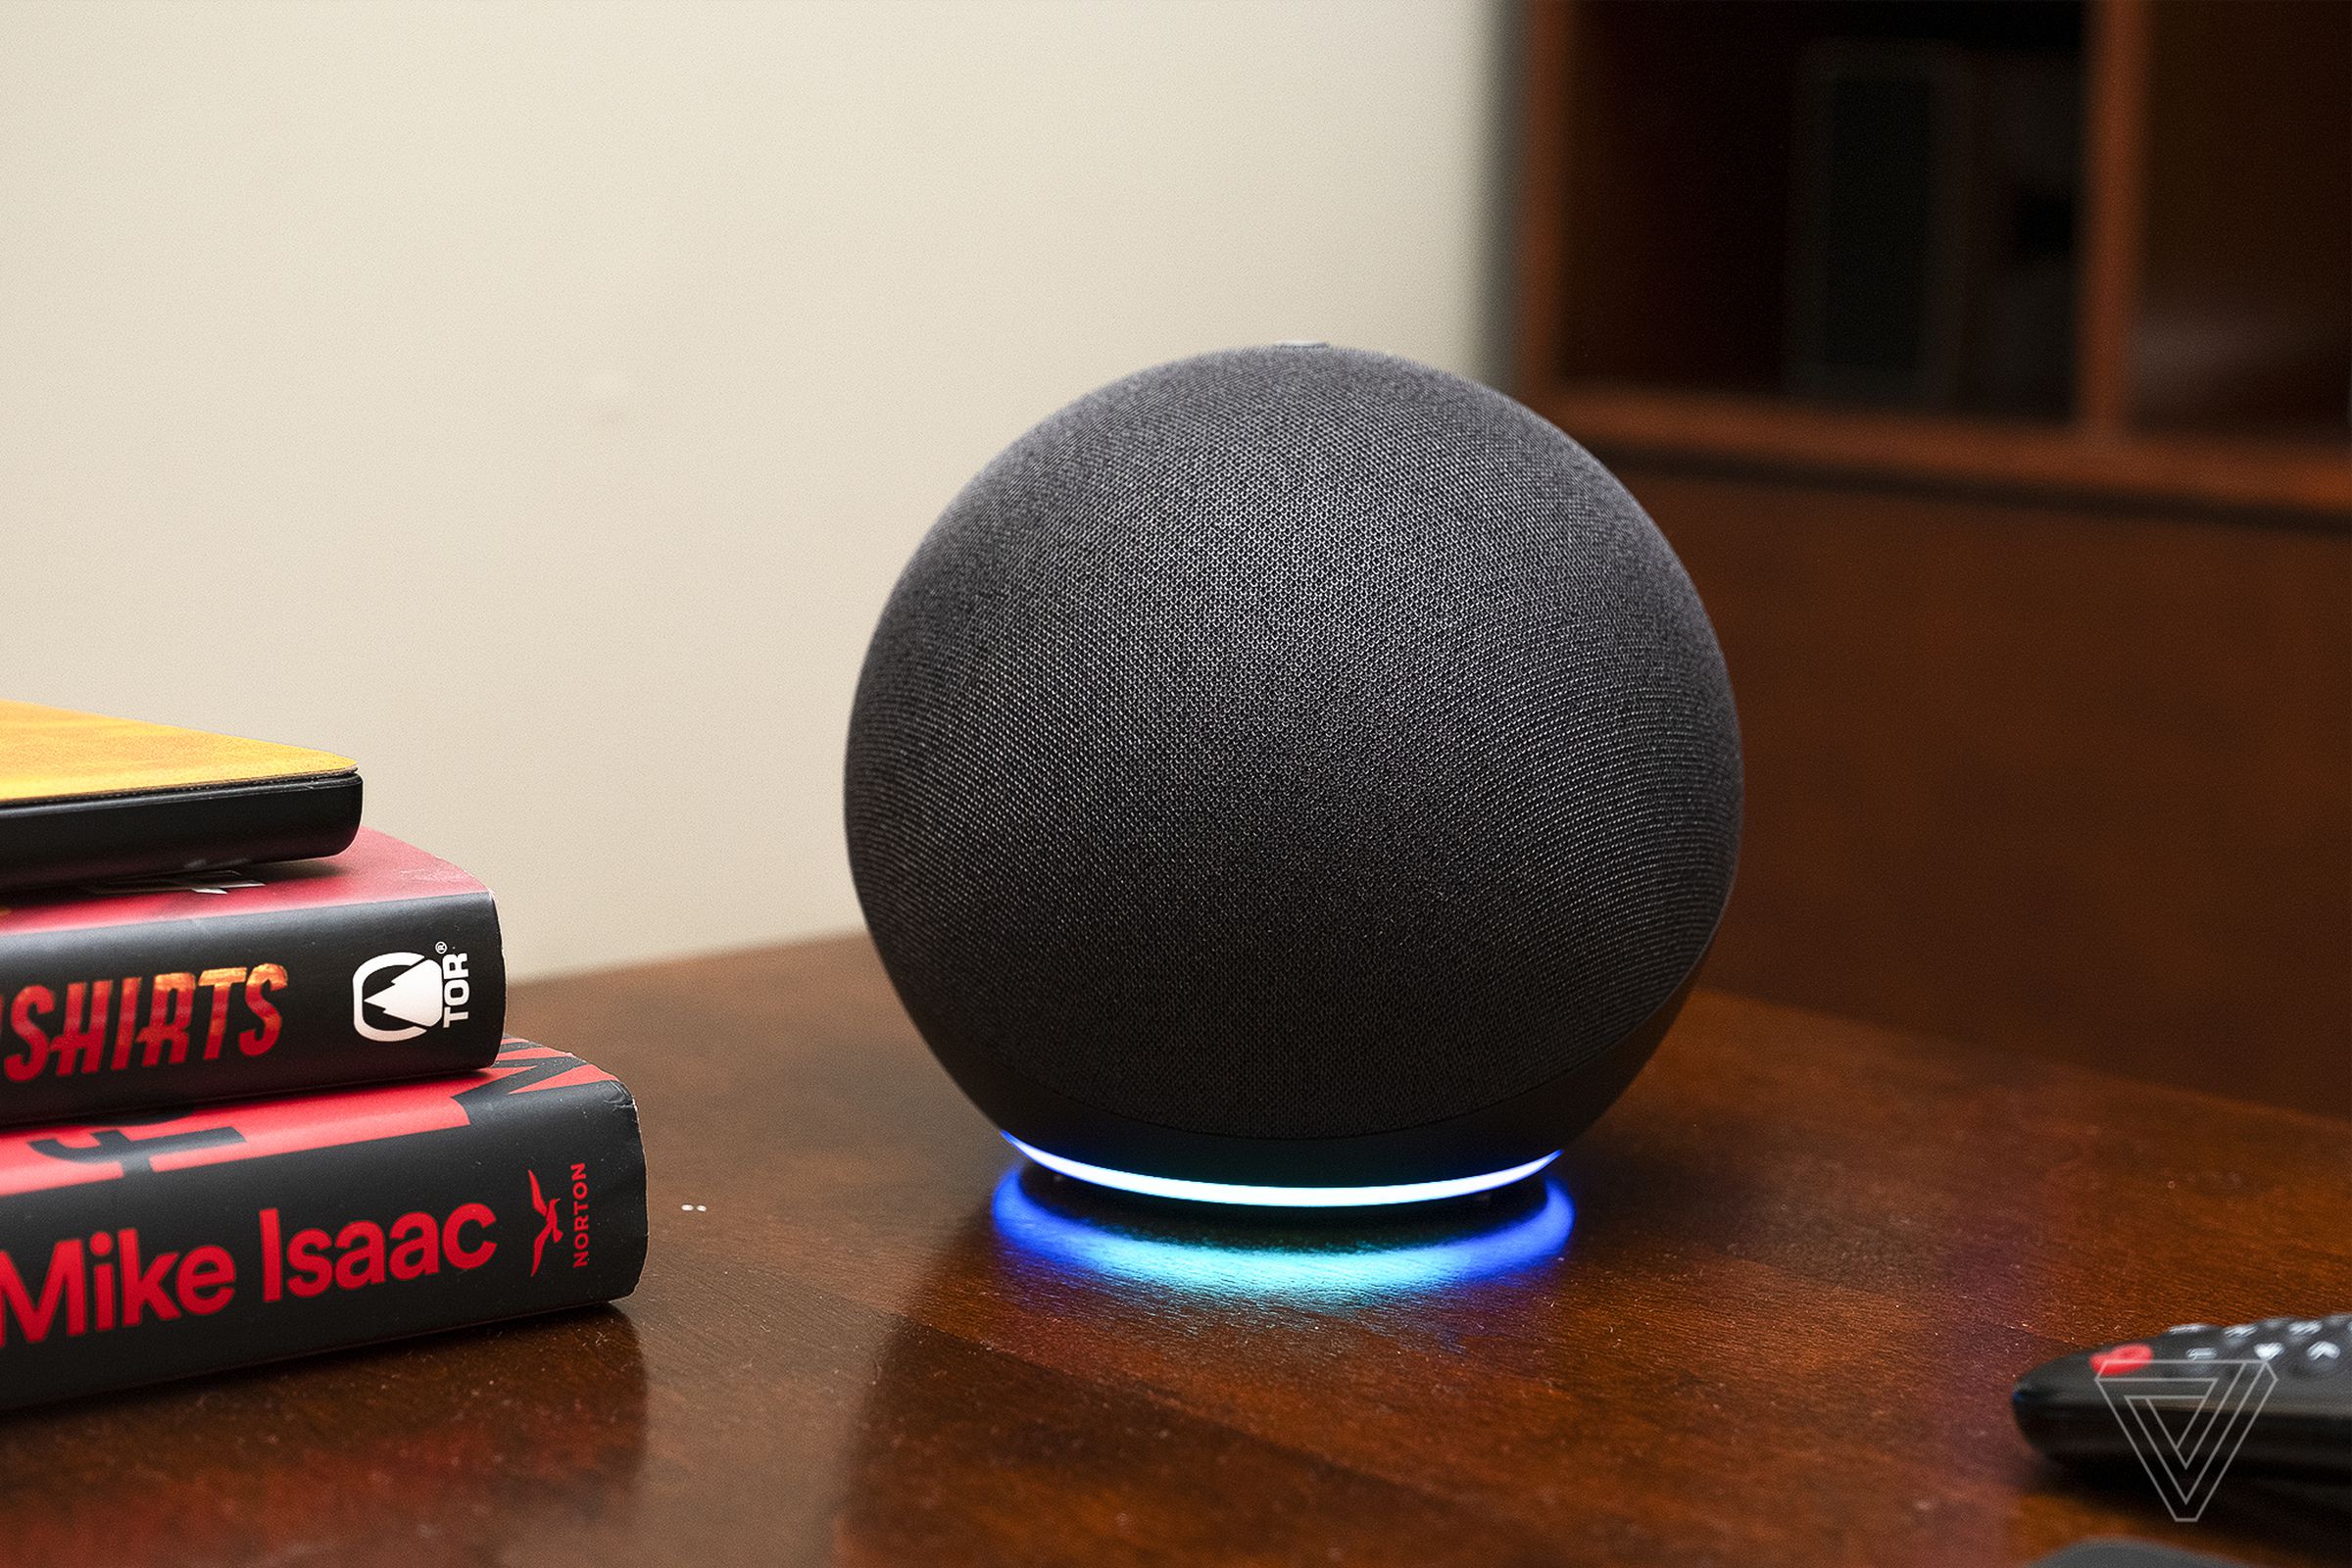 Amazon’s new Echo is shaped like a ball